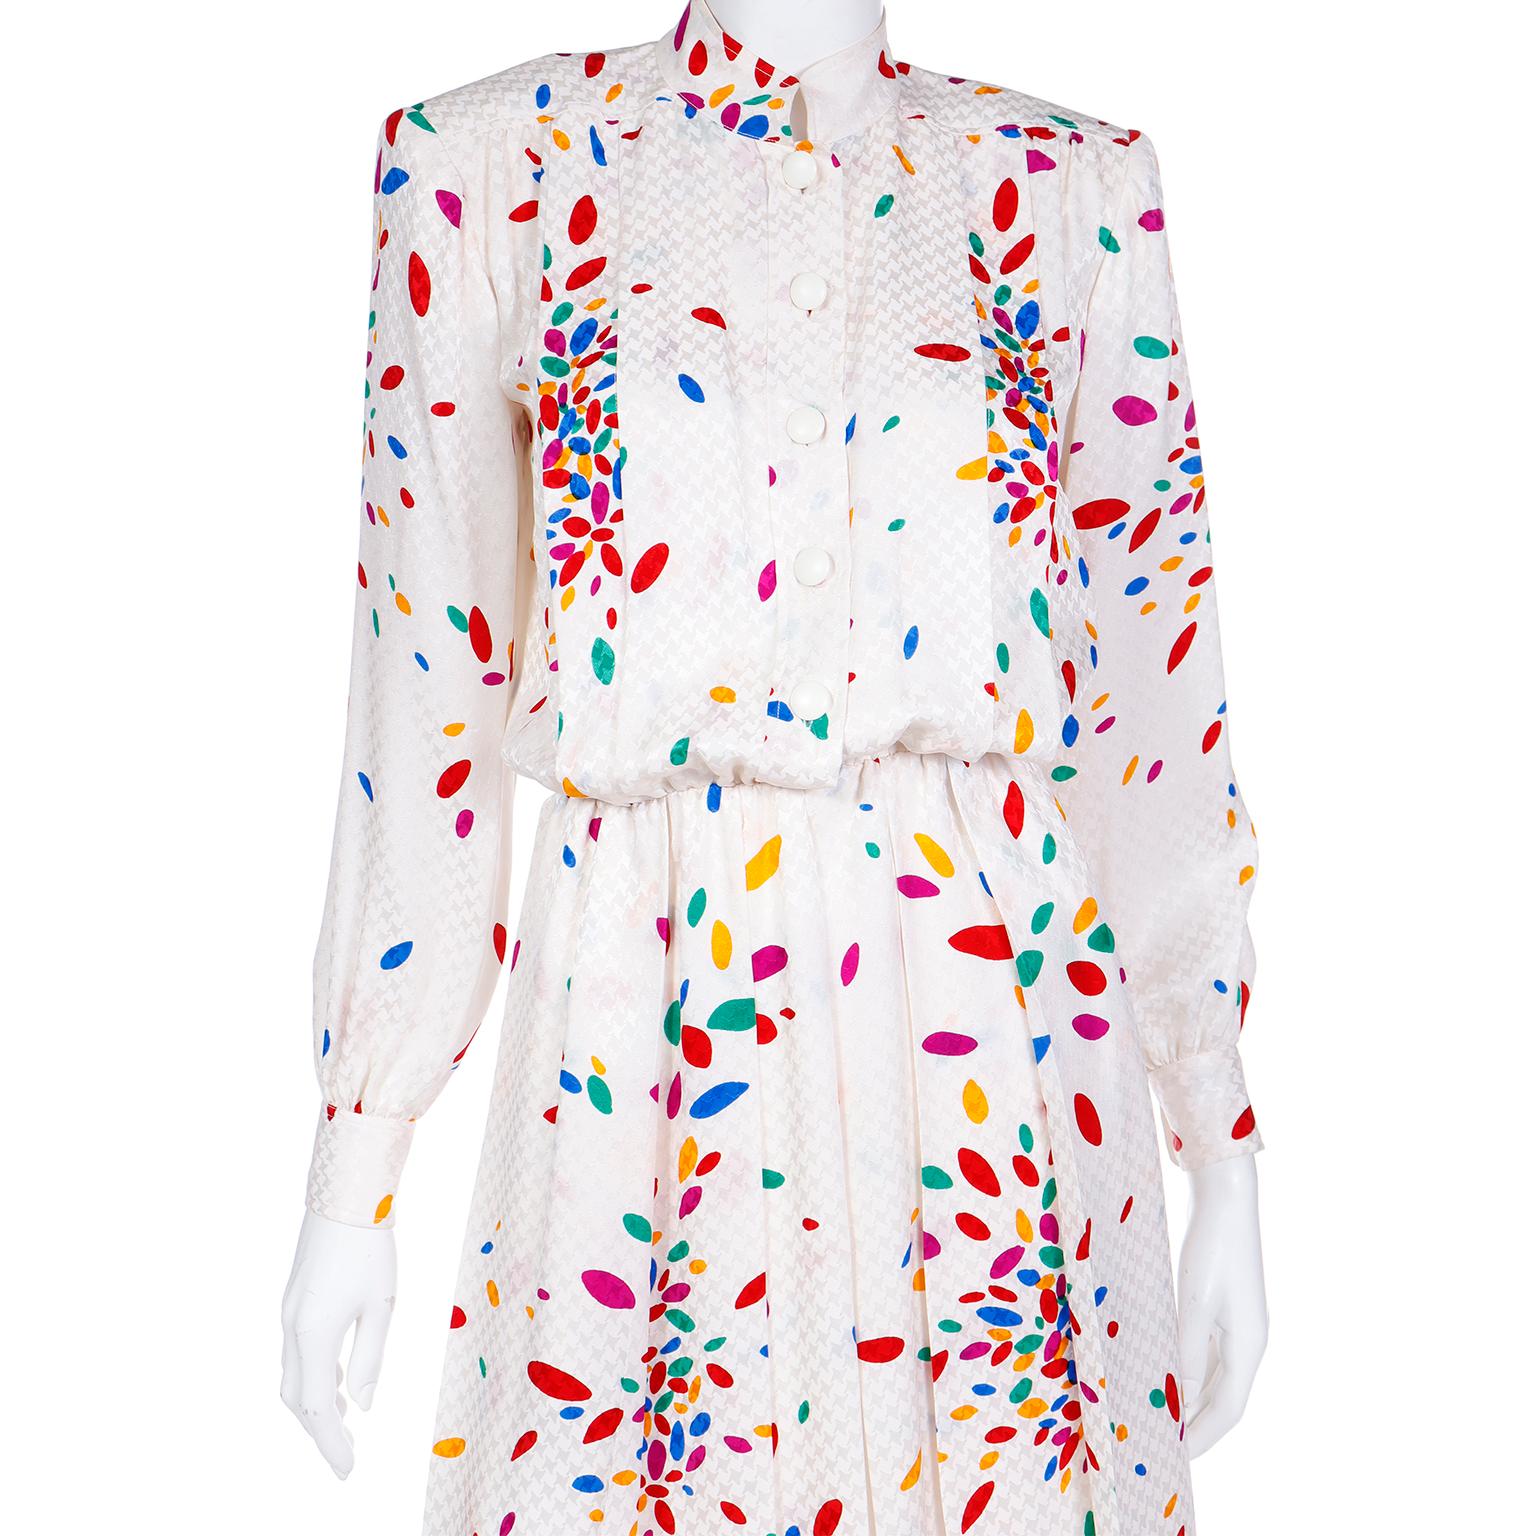 Yves Saint laurent Tonal White Print Silk Dress w Colorful Ovals & Polka Dots For Sale 3